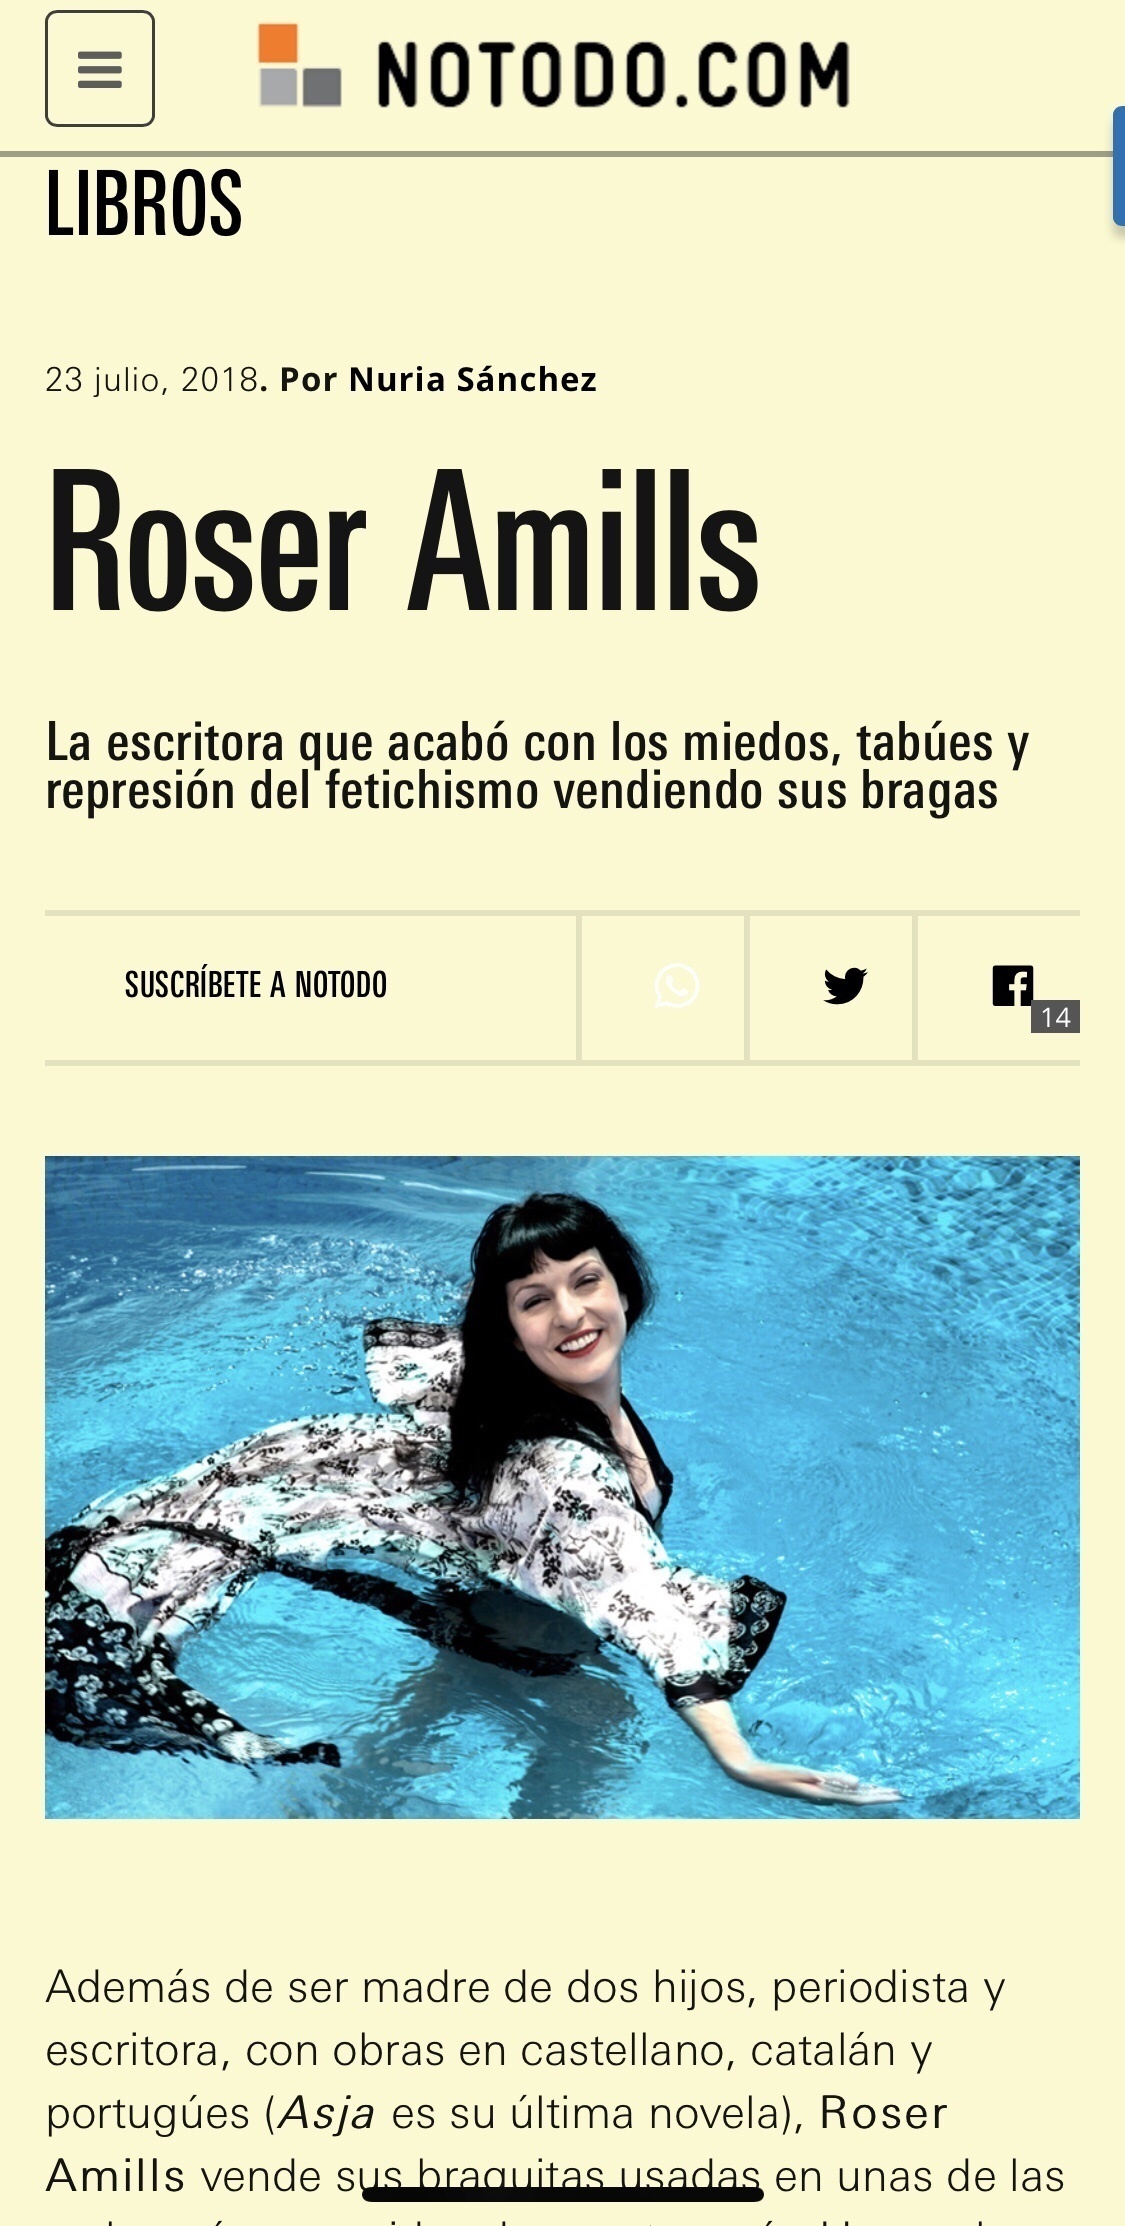 Me entrevista Nuria Sánchez para Notodo.com | Vender braguitas usadas y empoderamiento femenino